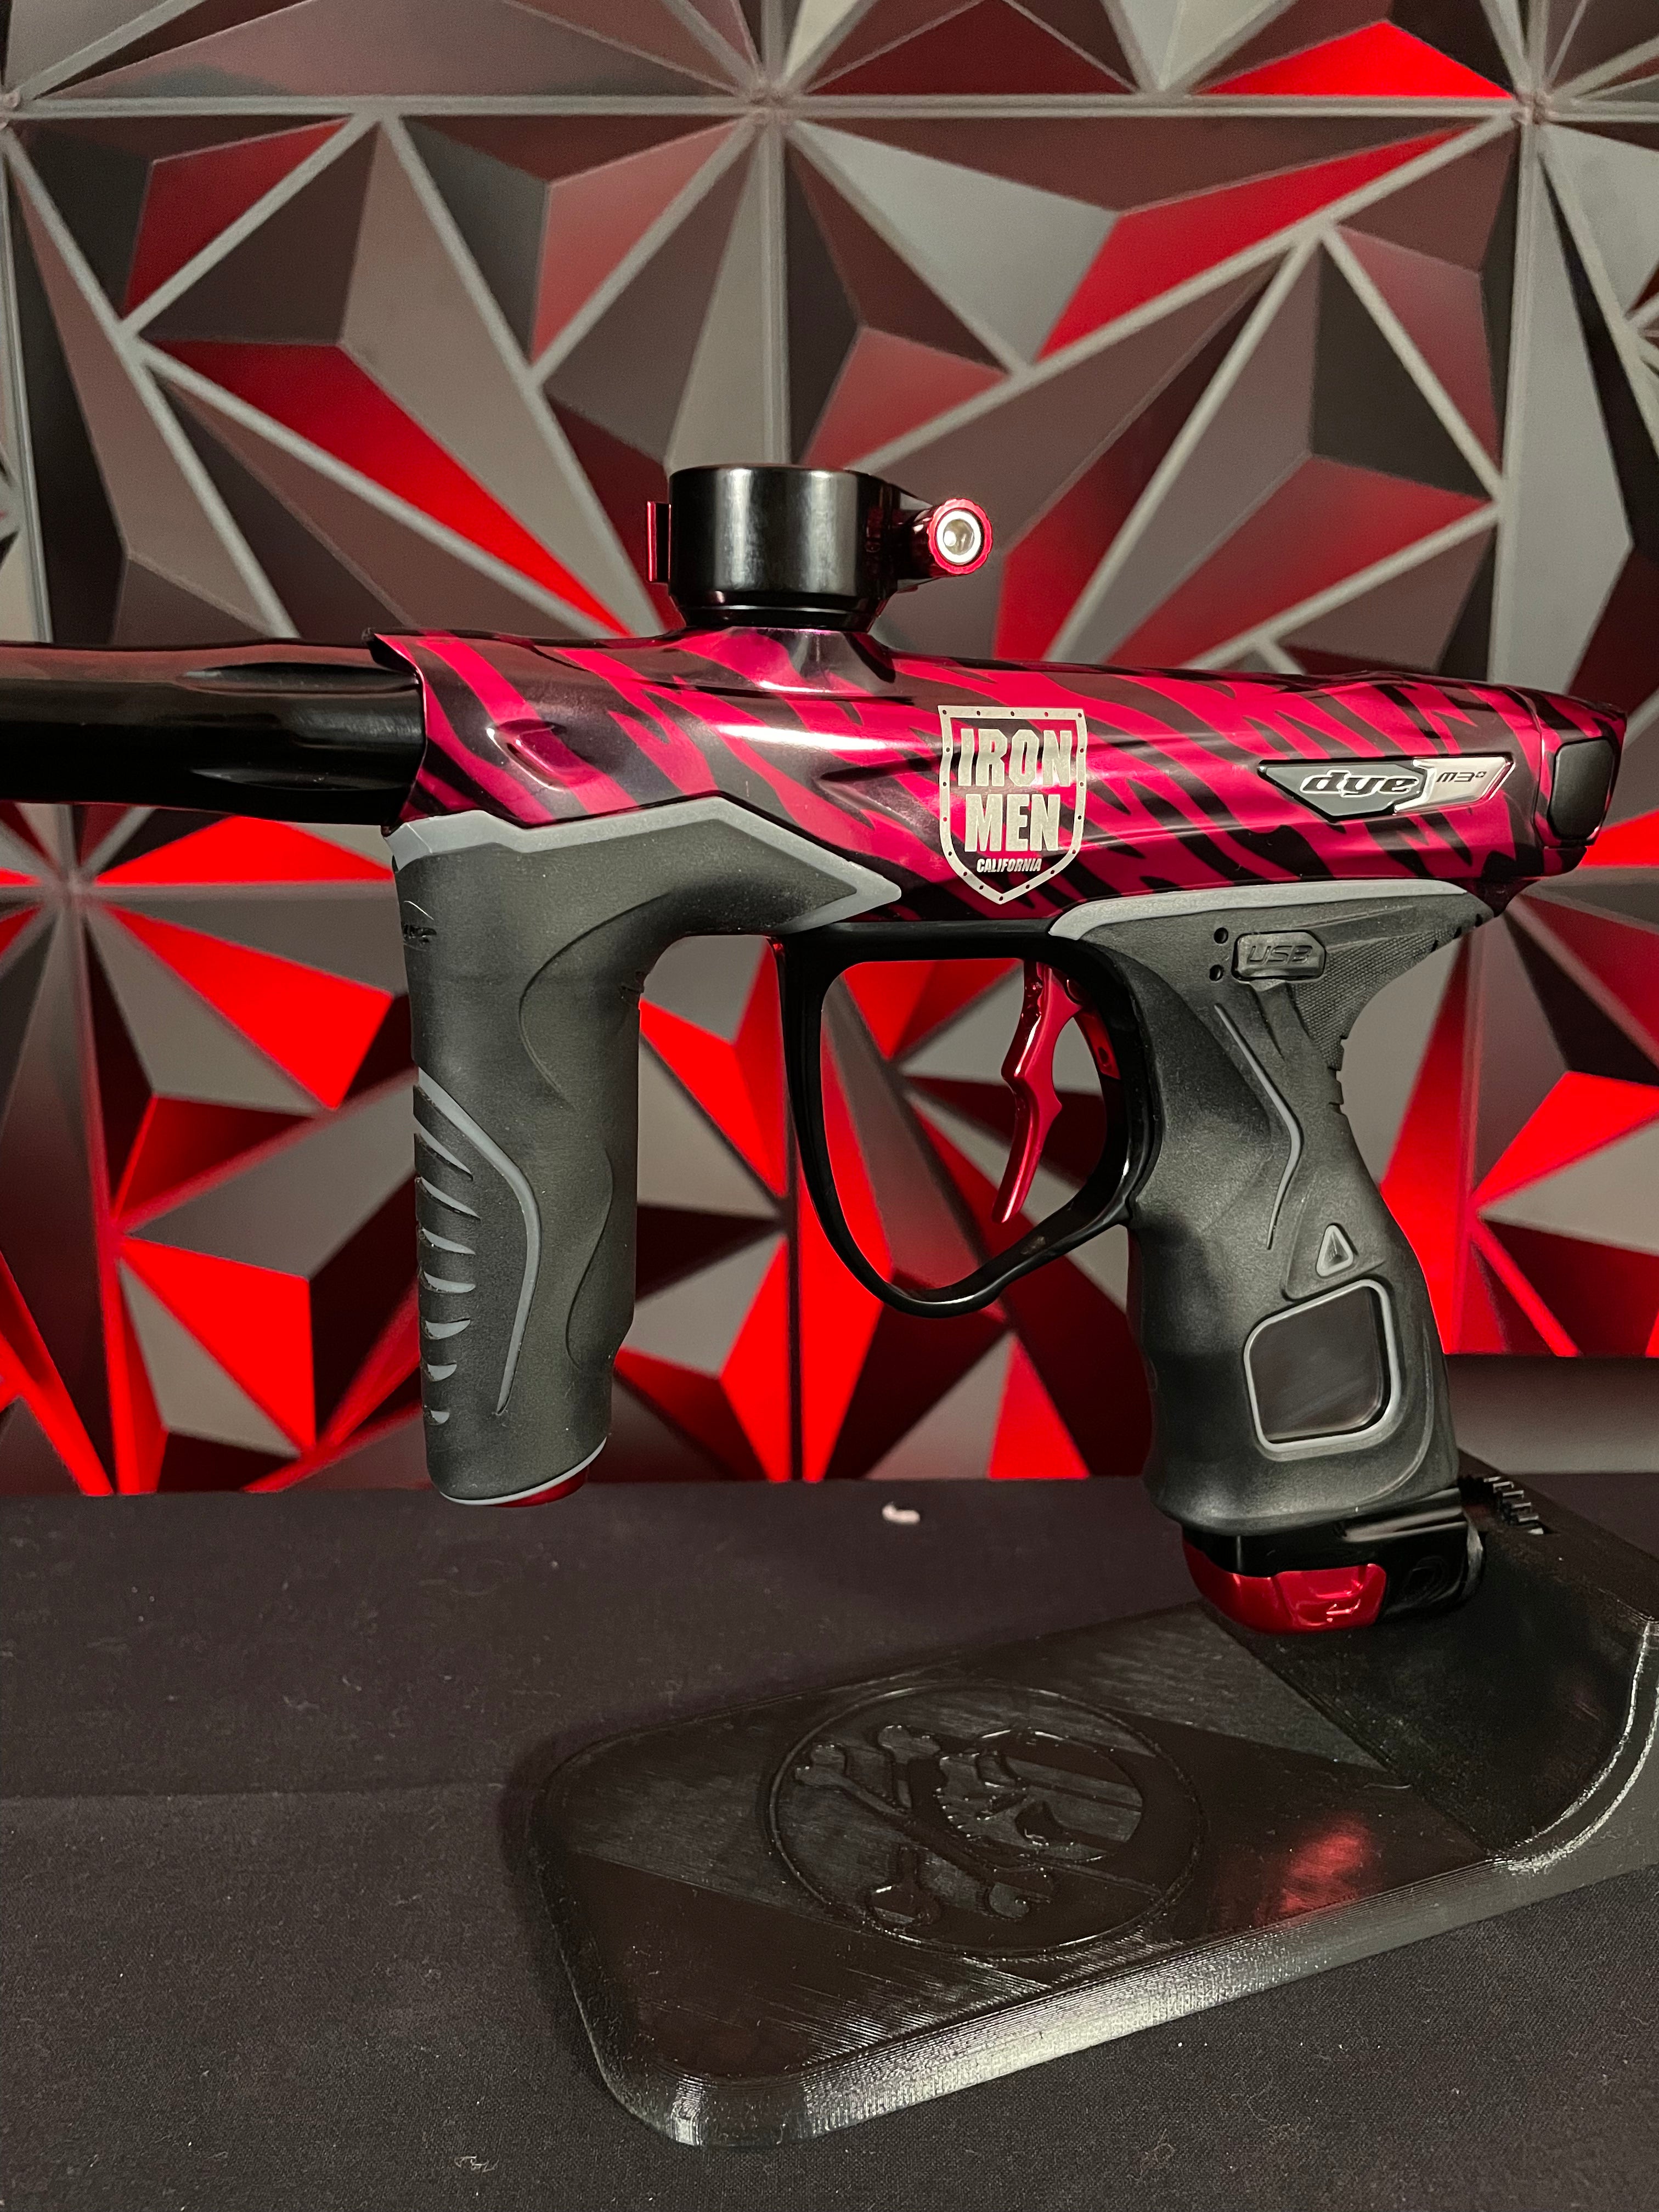 Used Dye M3+ Paintball Gun - LE Paxson Tiger w/MOSAir Charging Pad